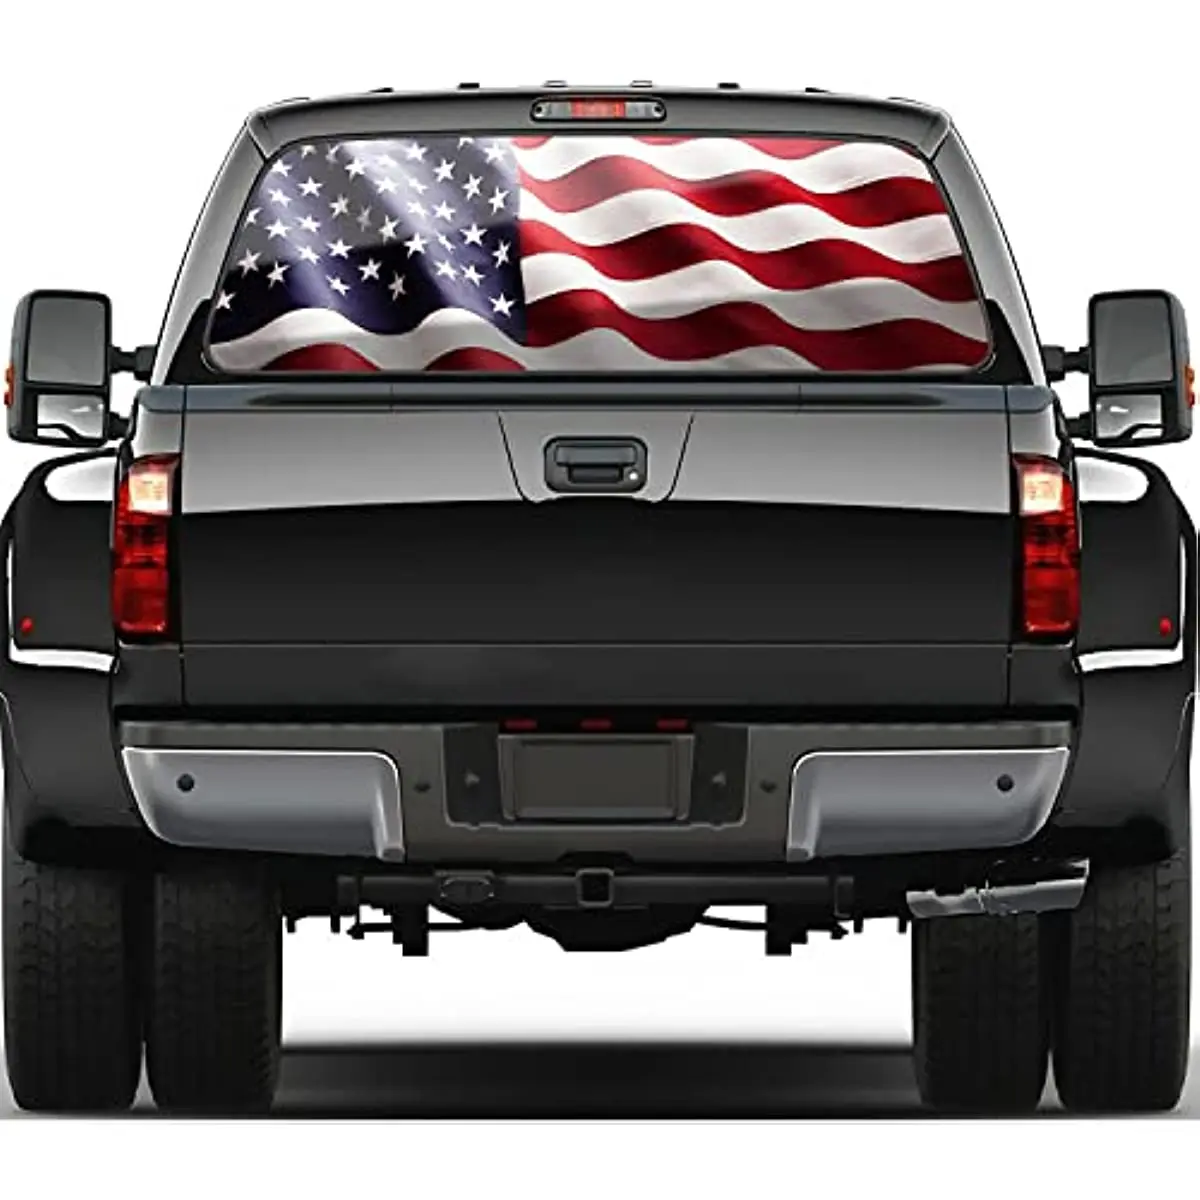 

Hsdiokl American Flag Truck Rear Window Decals,US Flag Truck Stickers,Perforated Vinyl Trucks, SUV, Cars, Universal,66''x20''